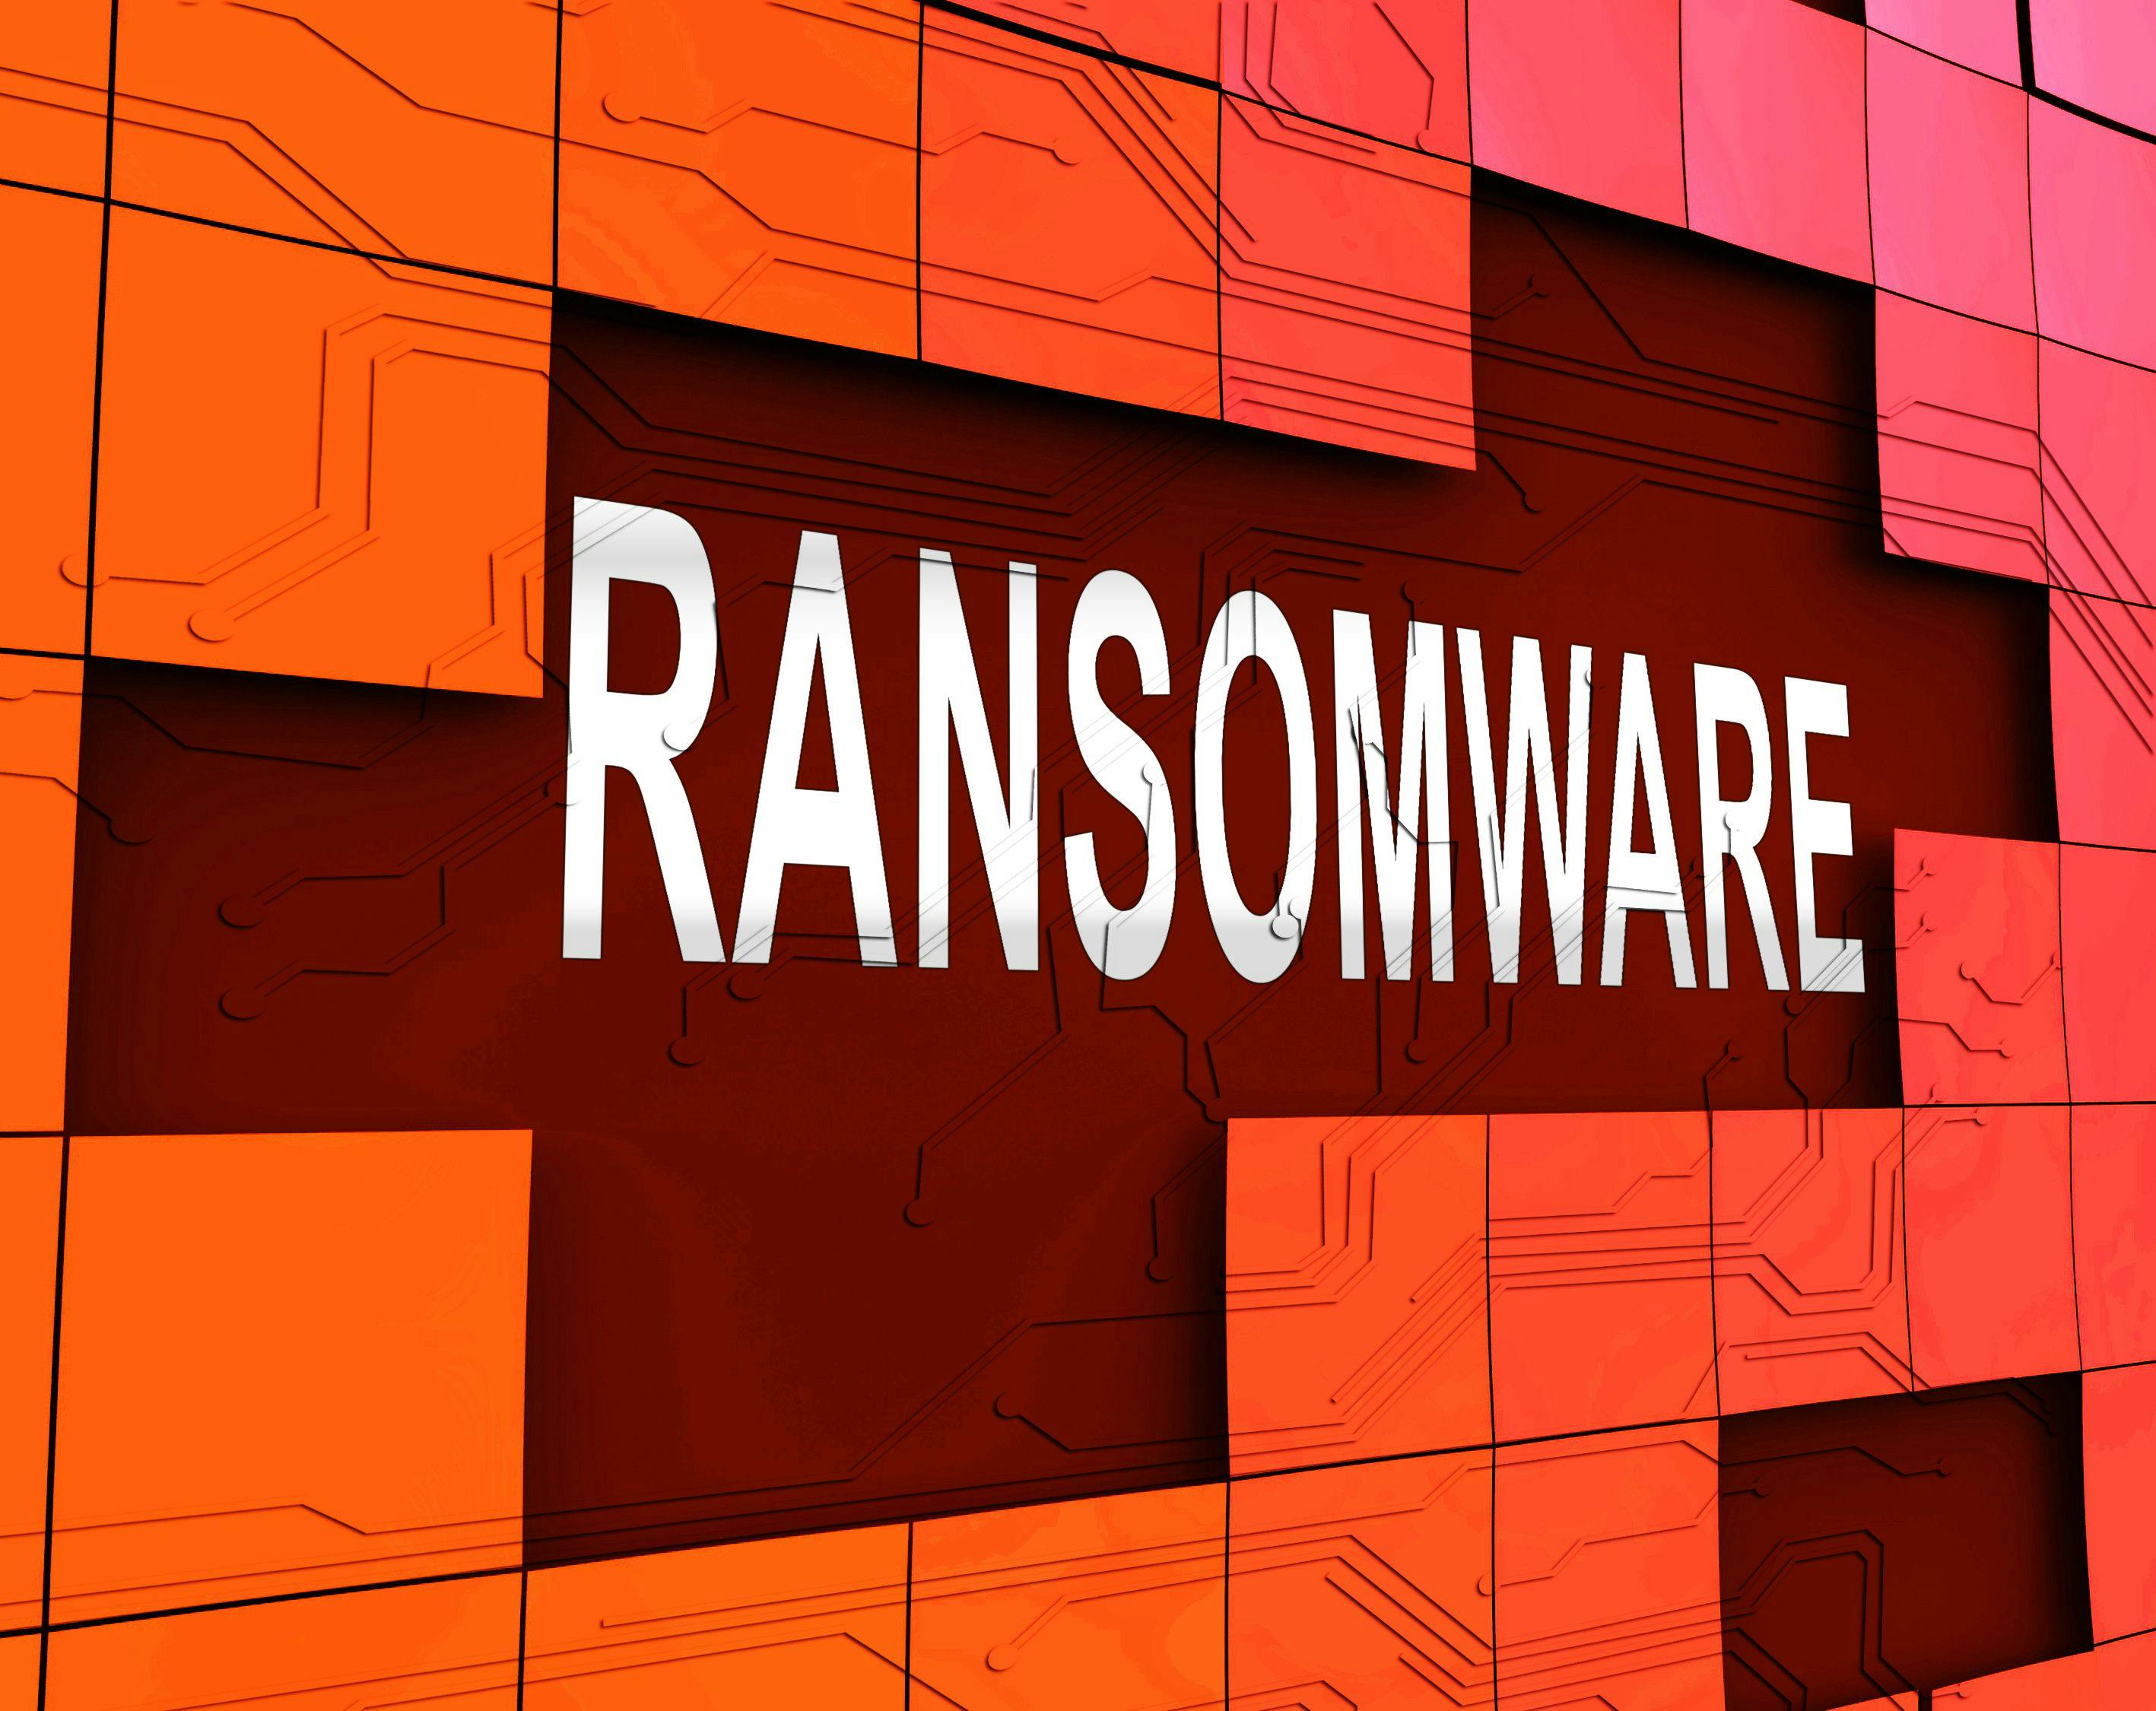 ransomware concept